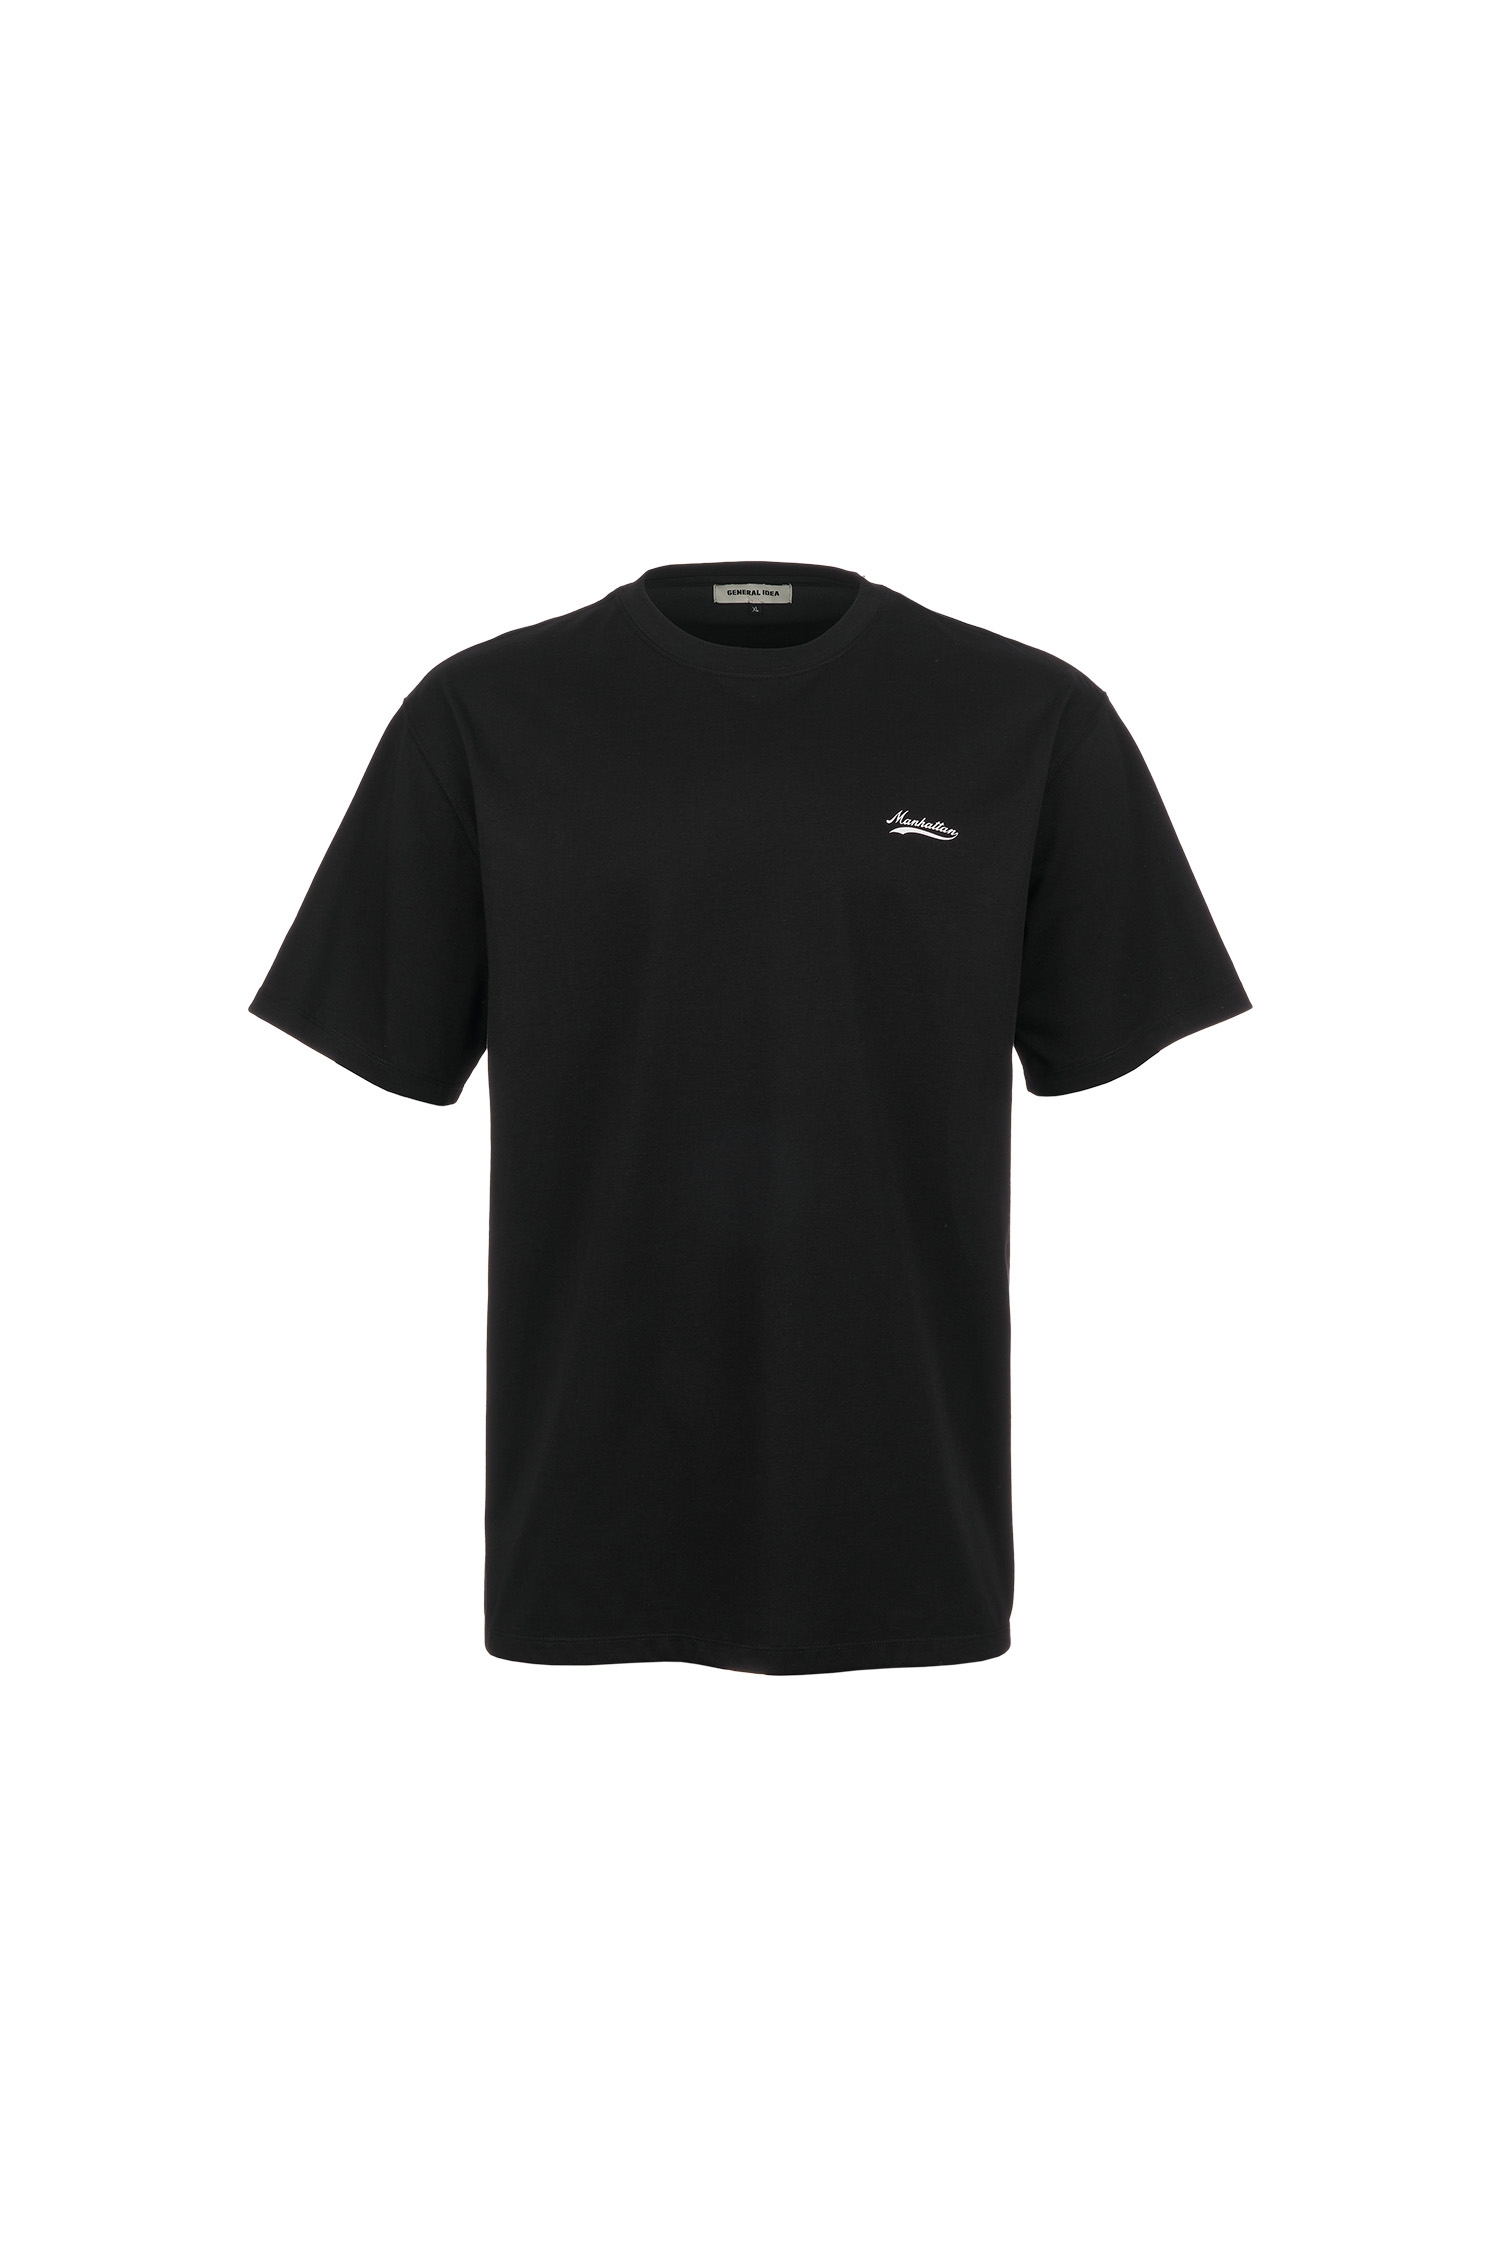 UNISEX マンハッタン半袖Tシャツ [BLACK]